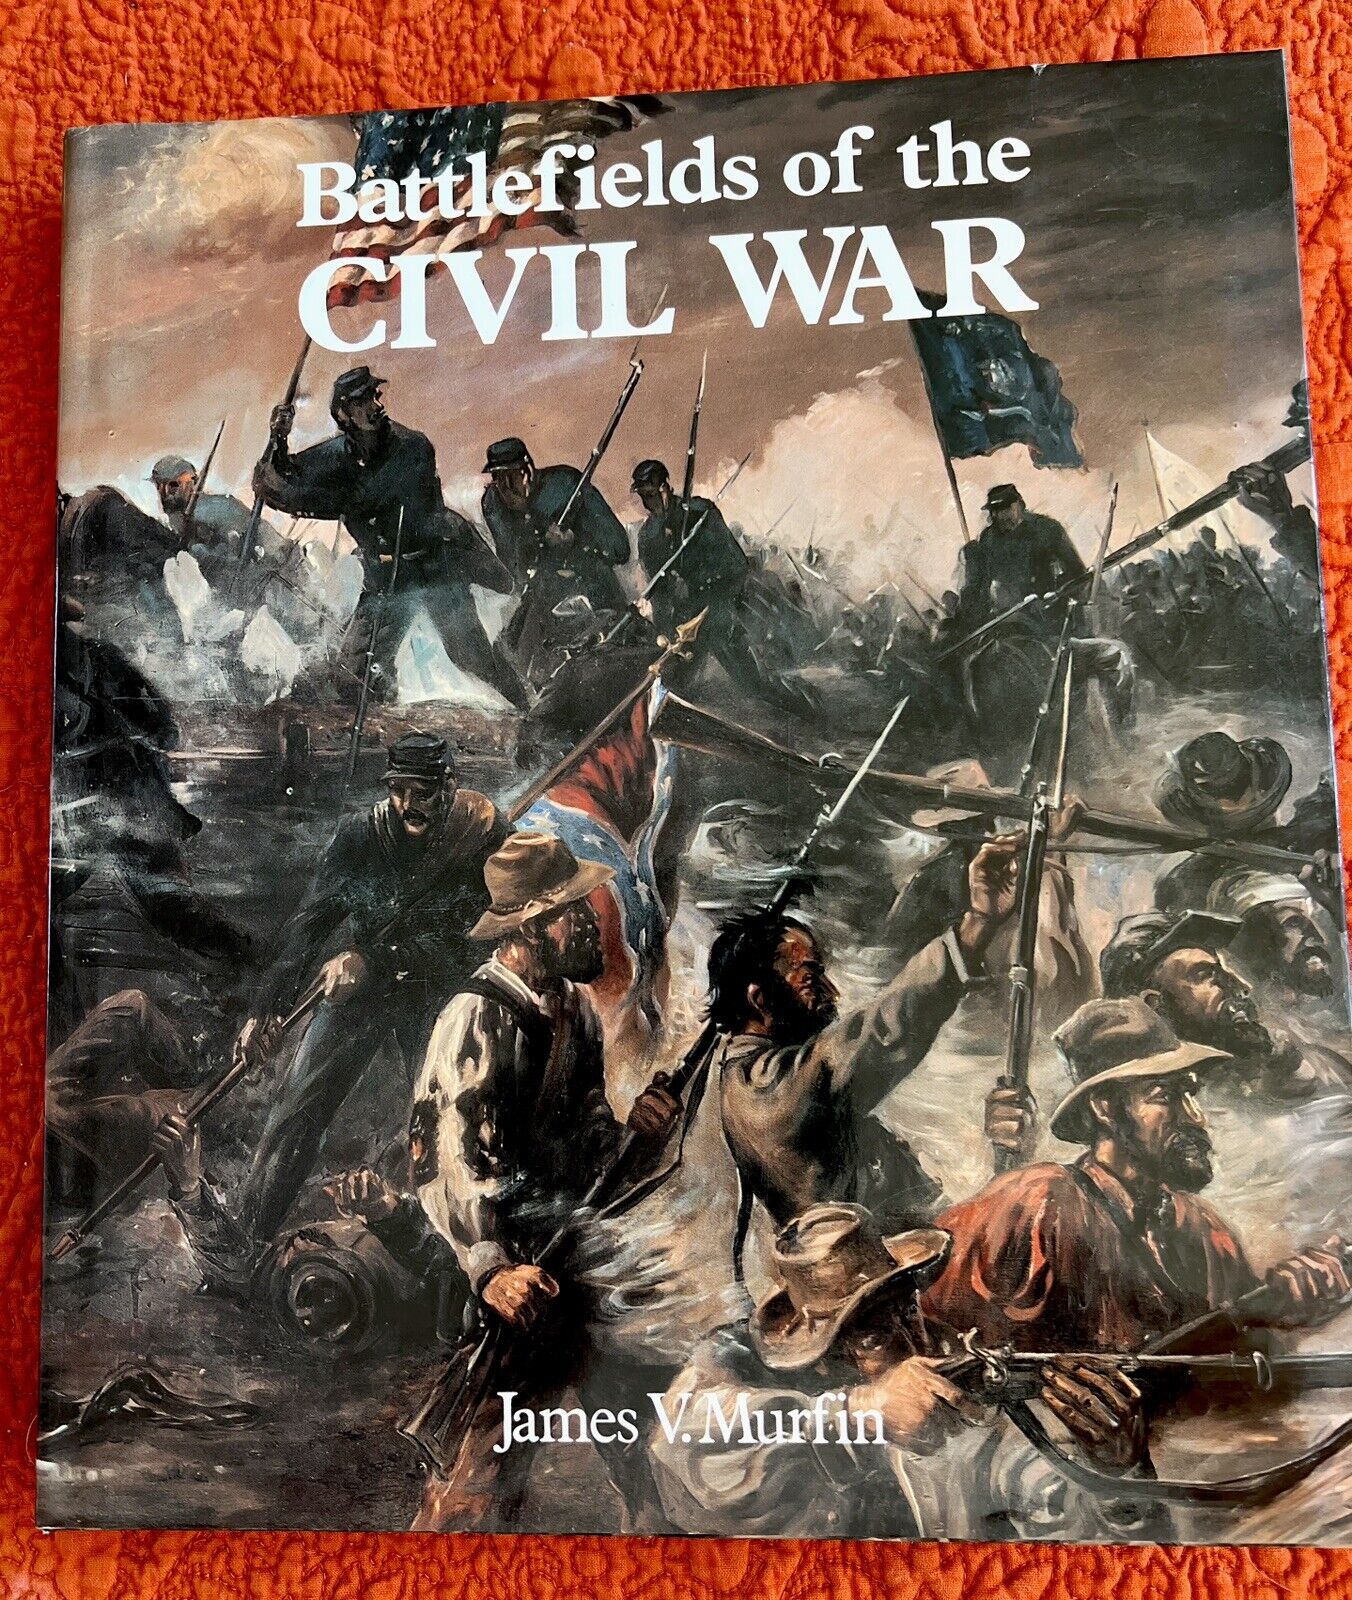 1990 BATTLEFIELDS OF THE CIVIL WAR James V. Murfin oversized hardcover Excellent